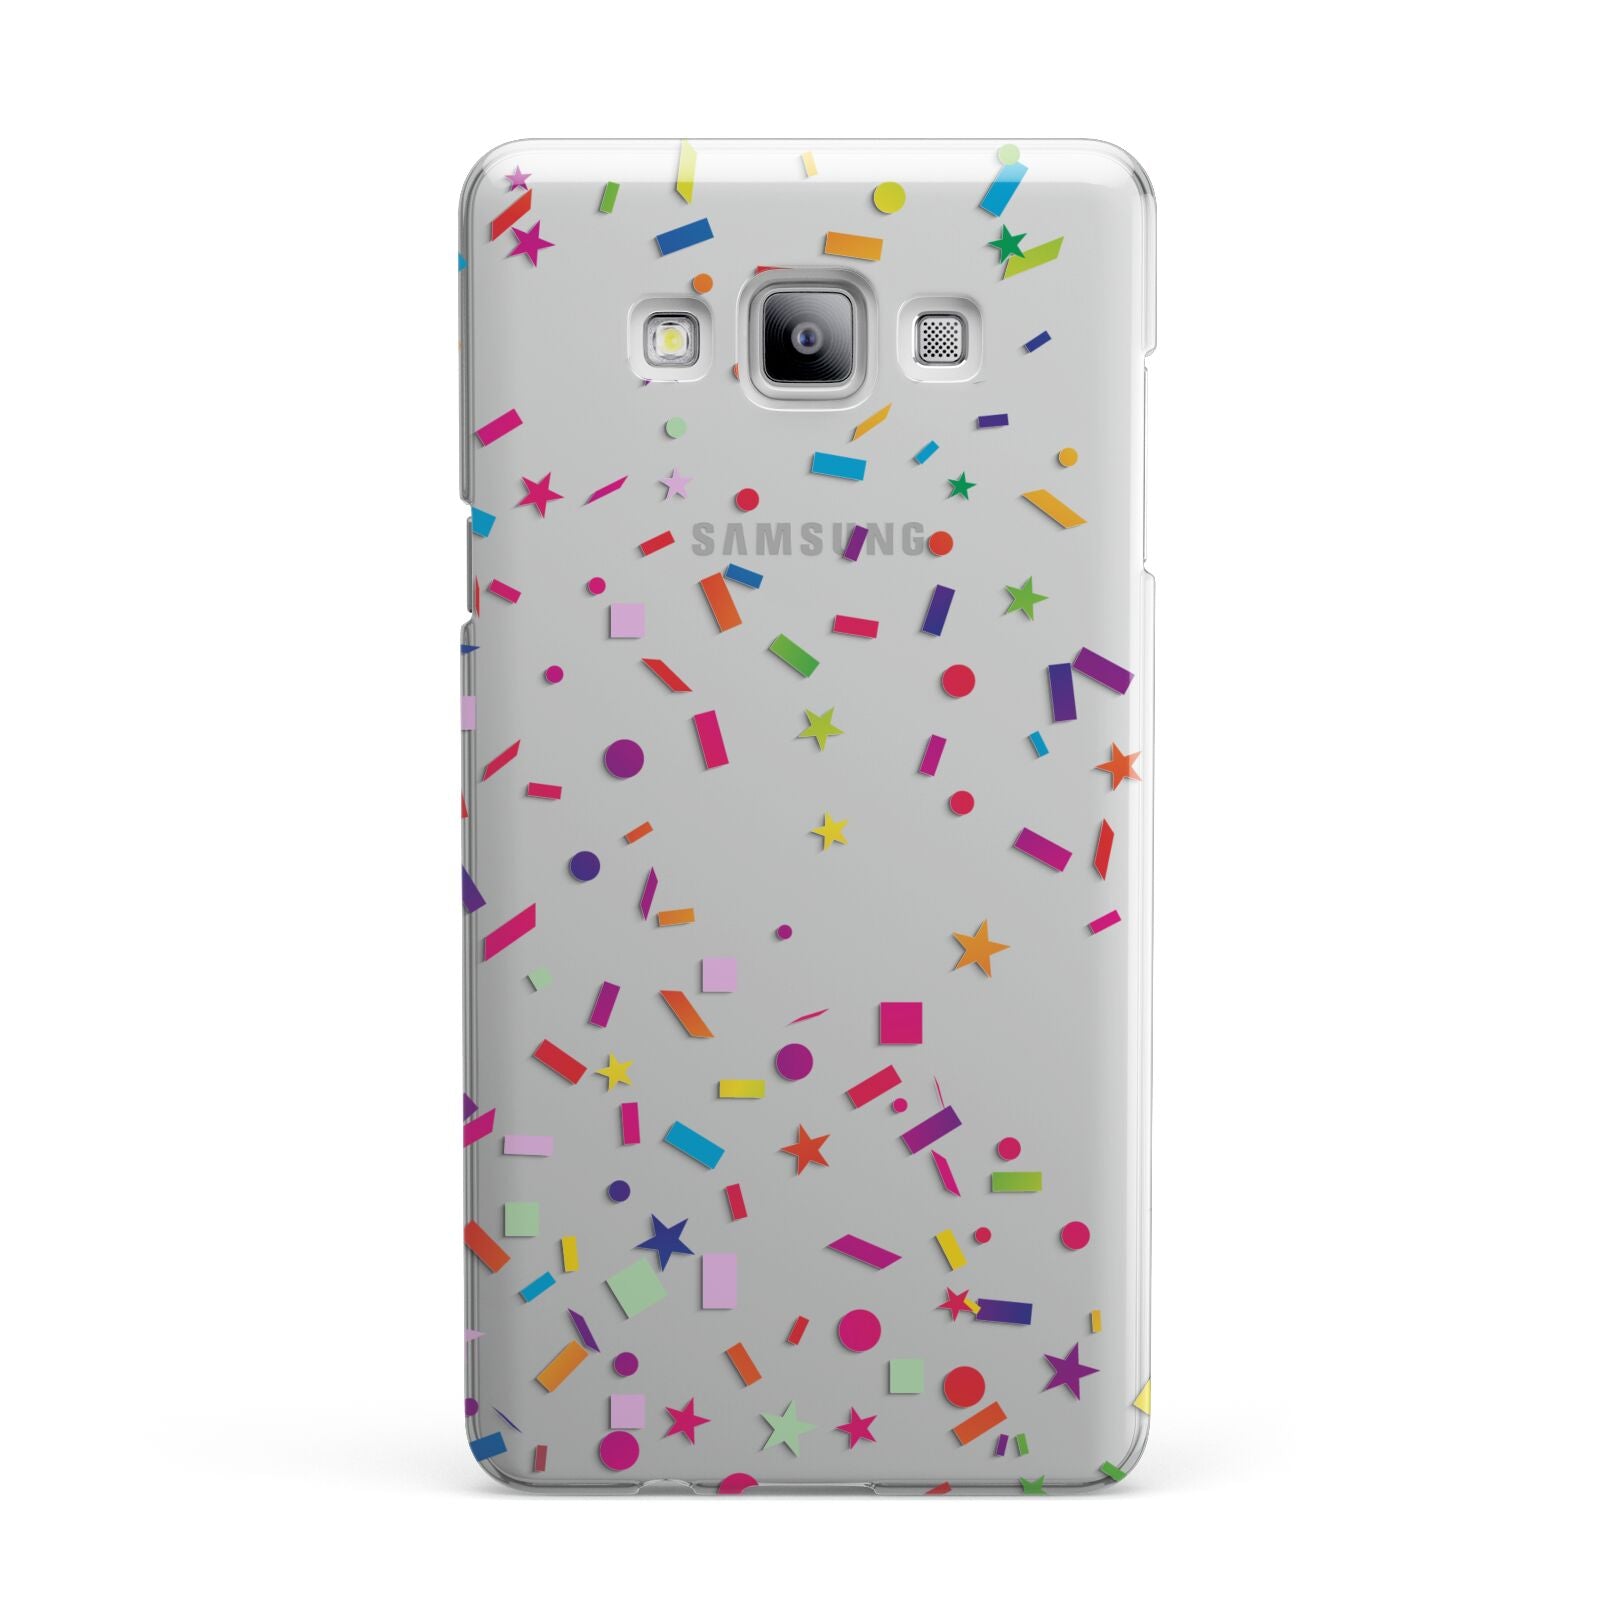 Confetti Samsung Galaxy A7 2015 Case